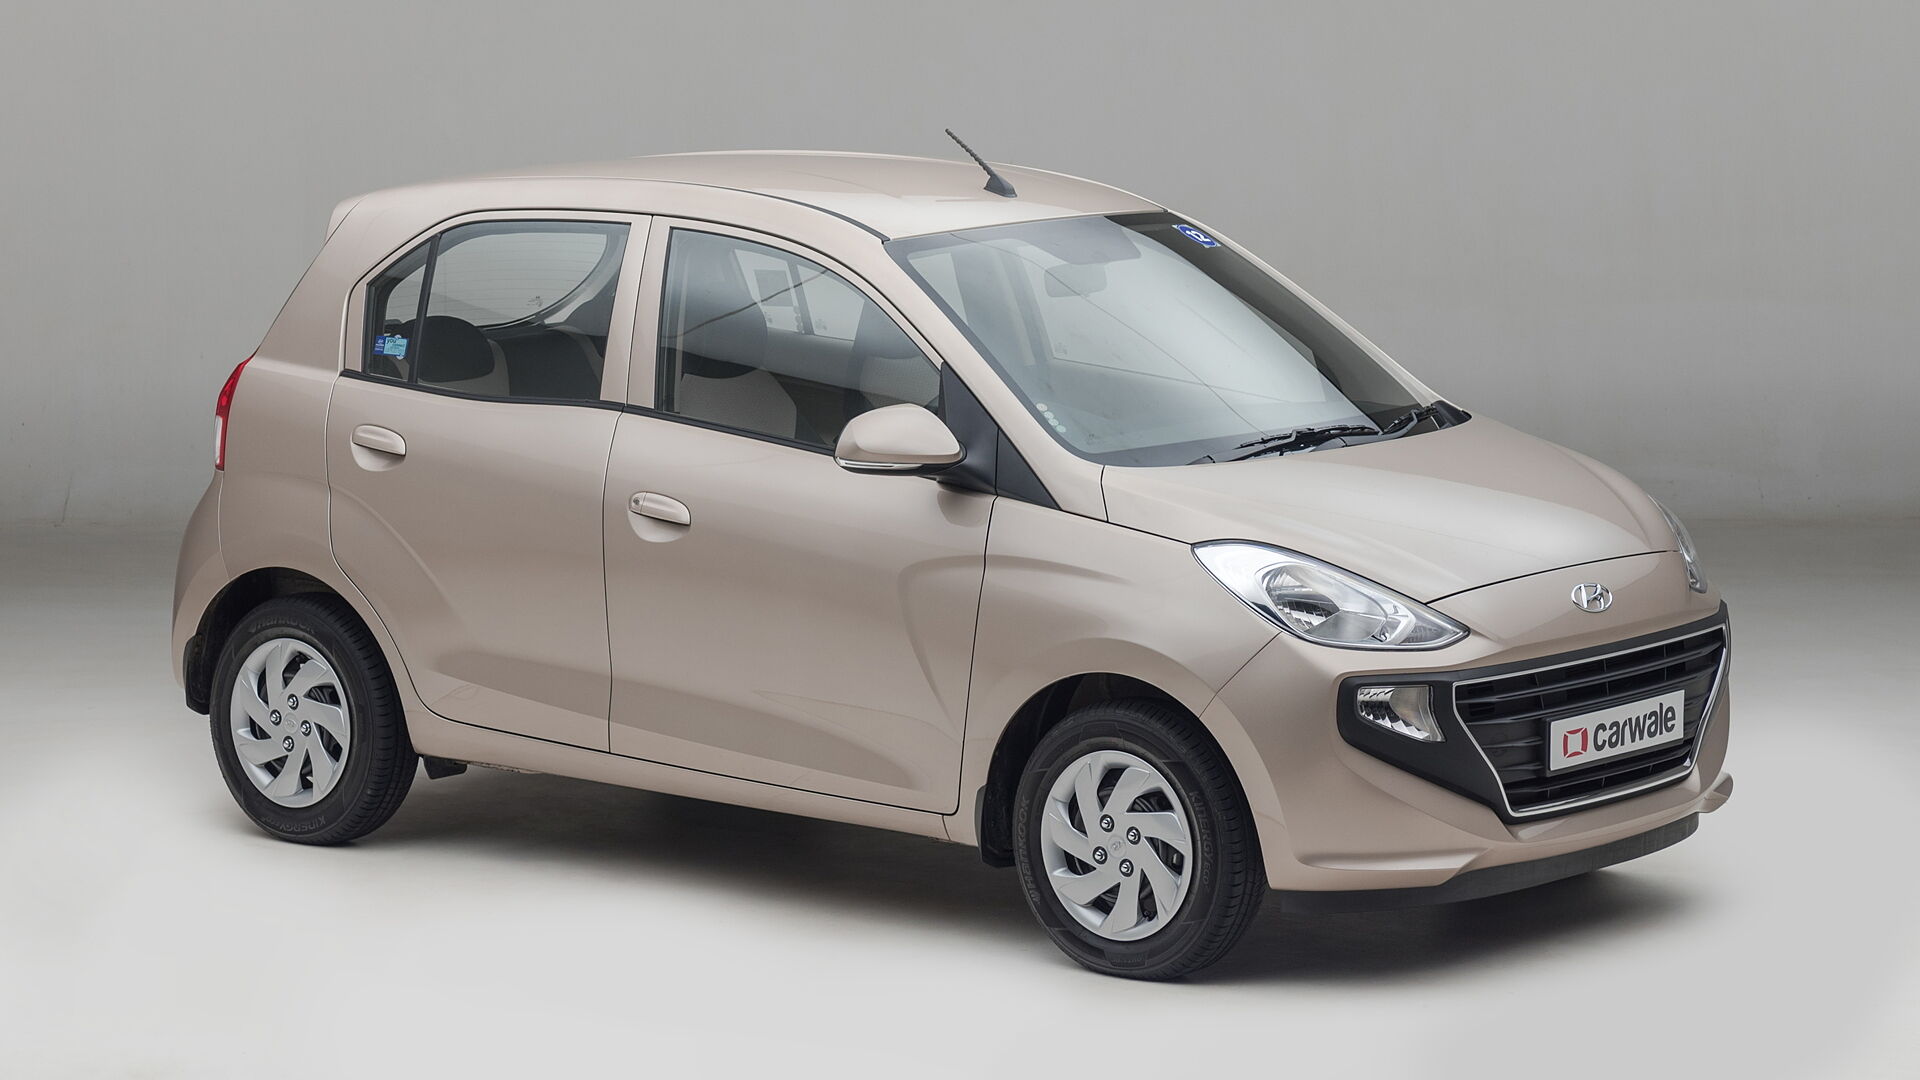 Hyundai Santro Price - Images, Colors & Reviews - CarWale